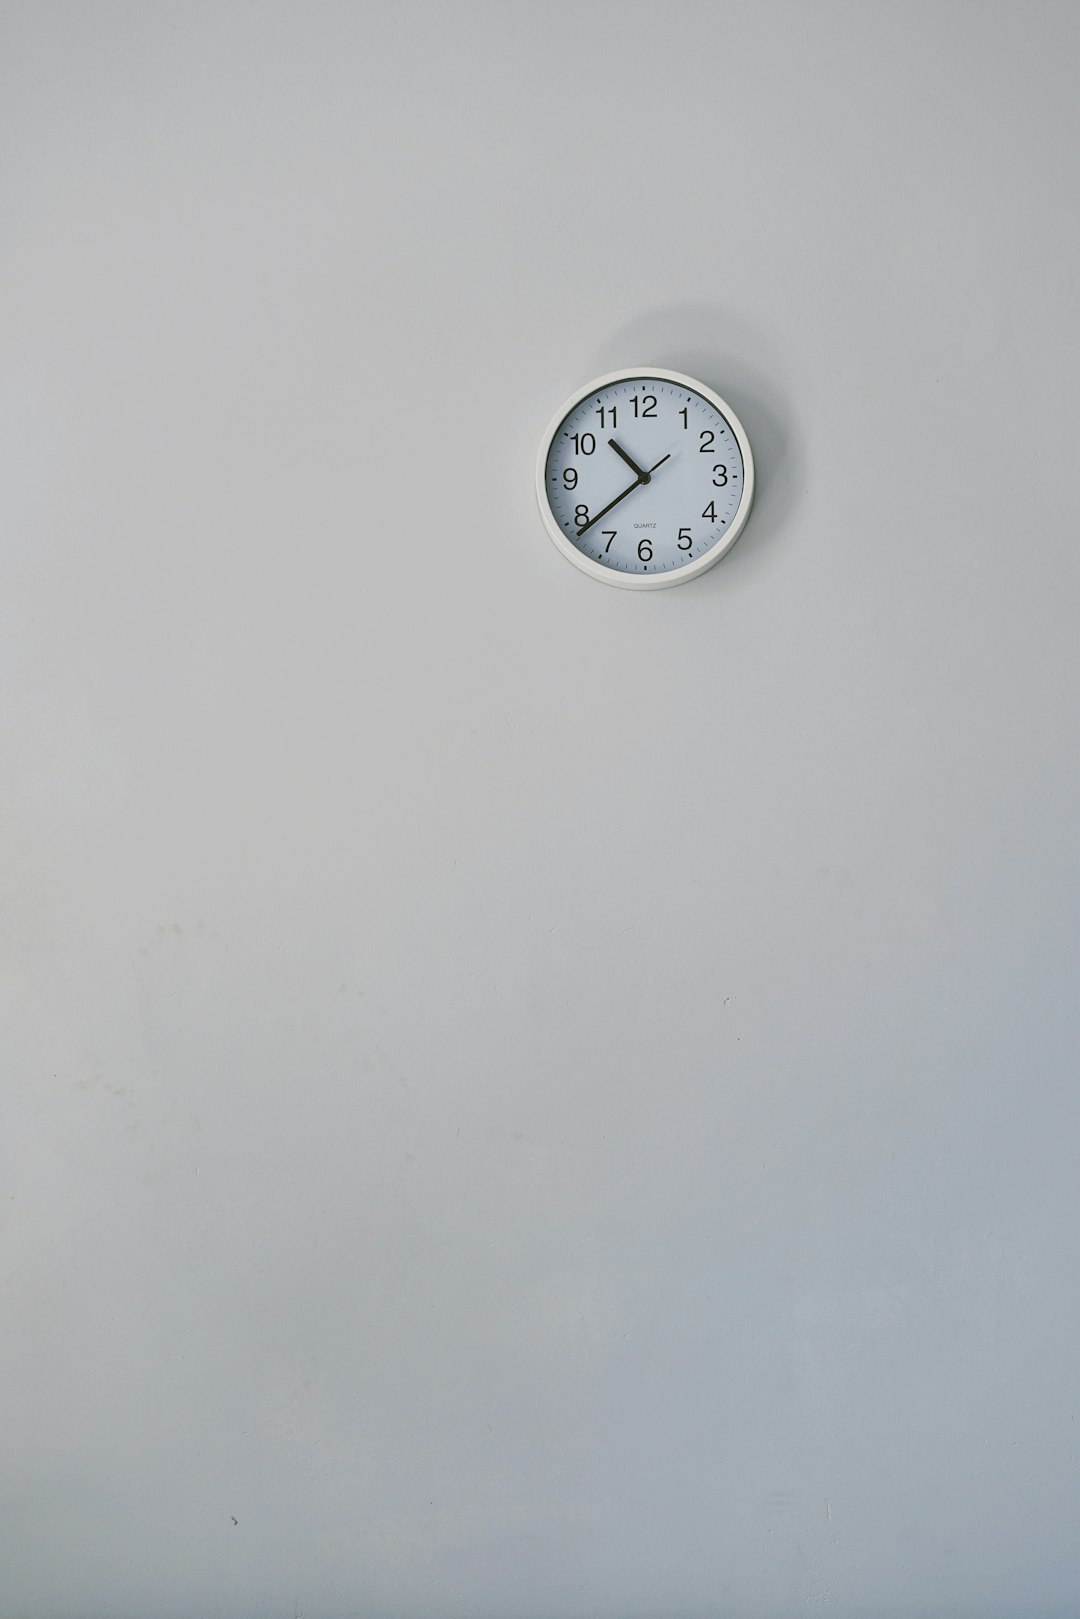 round white analog wall clock displaying 10:38